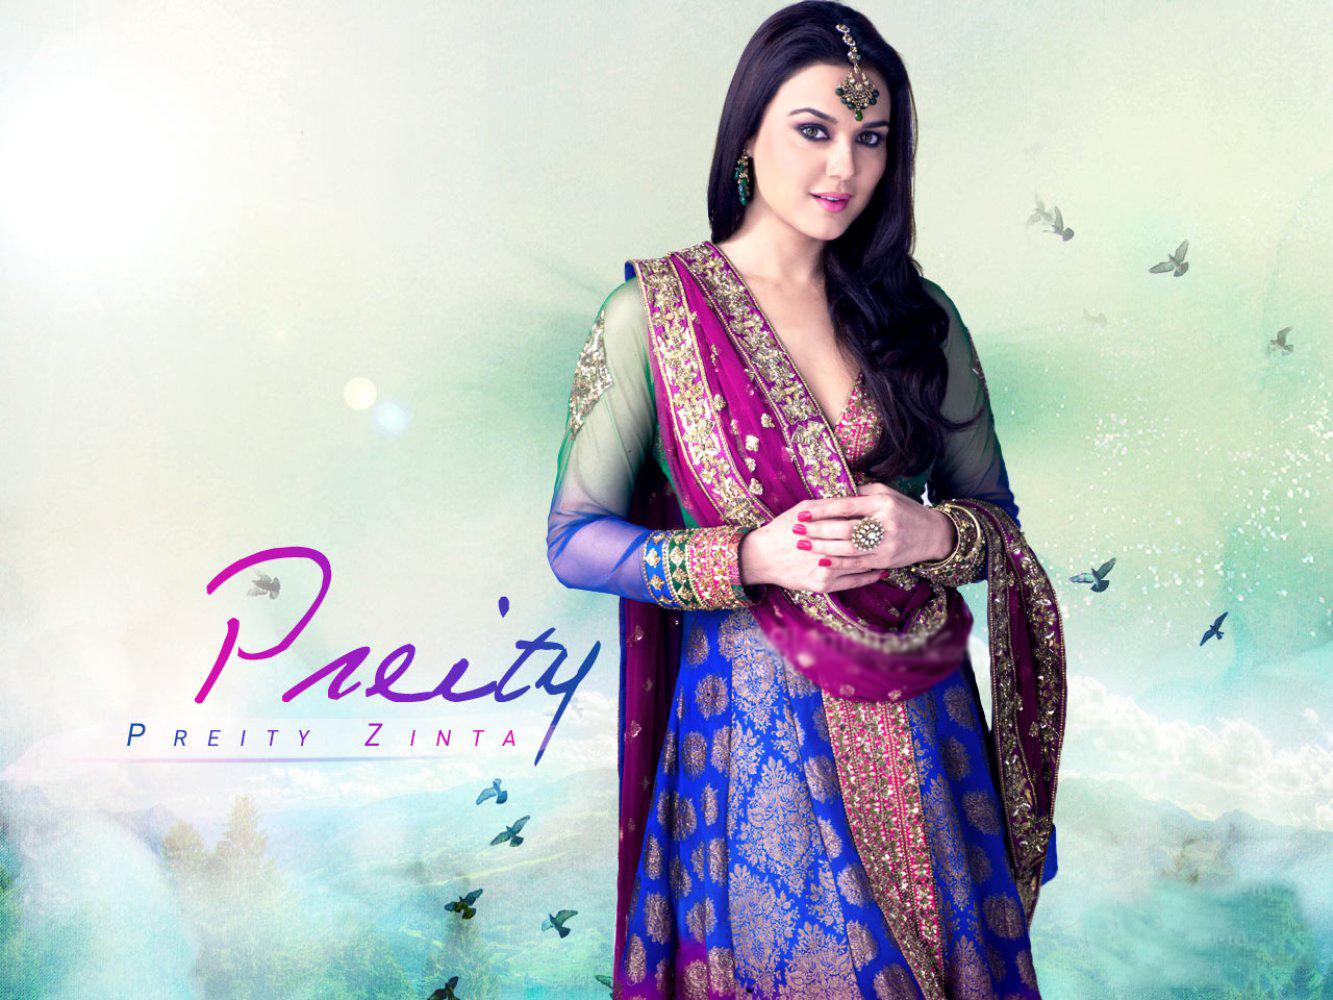 Bollywood Dimple Girl Preity Zinta Latest Wallpaper & Pics